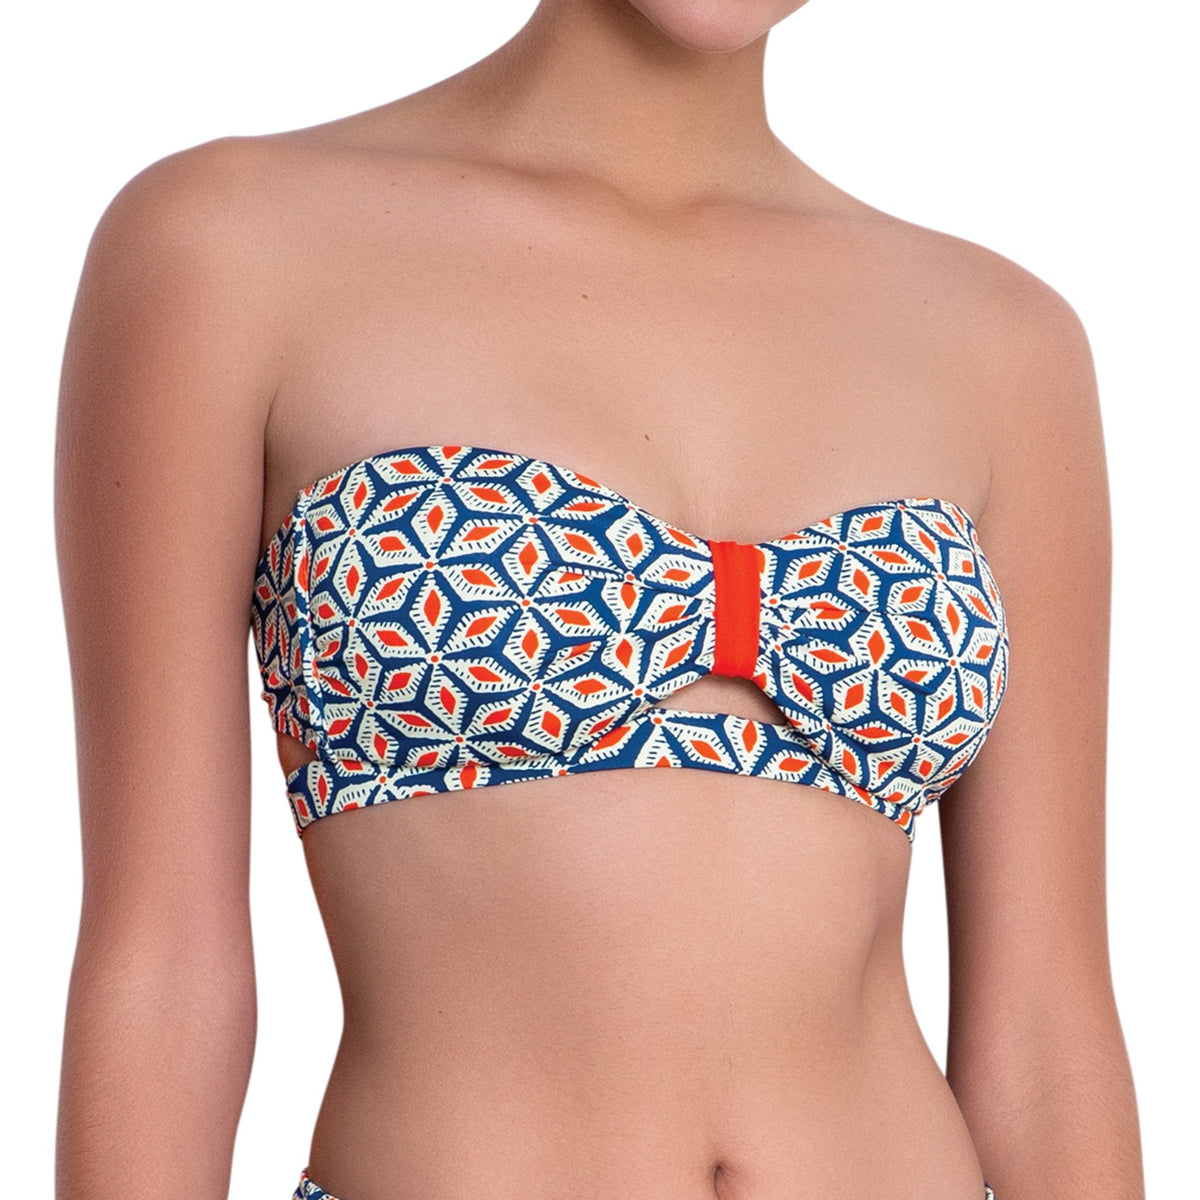 B√âR√âNICE bandeau bra, printed bikini top by ALMA swimwear ‚Äì front view 2